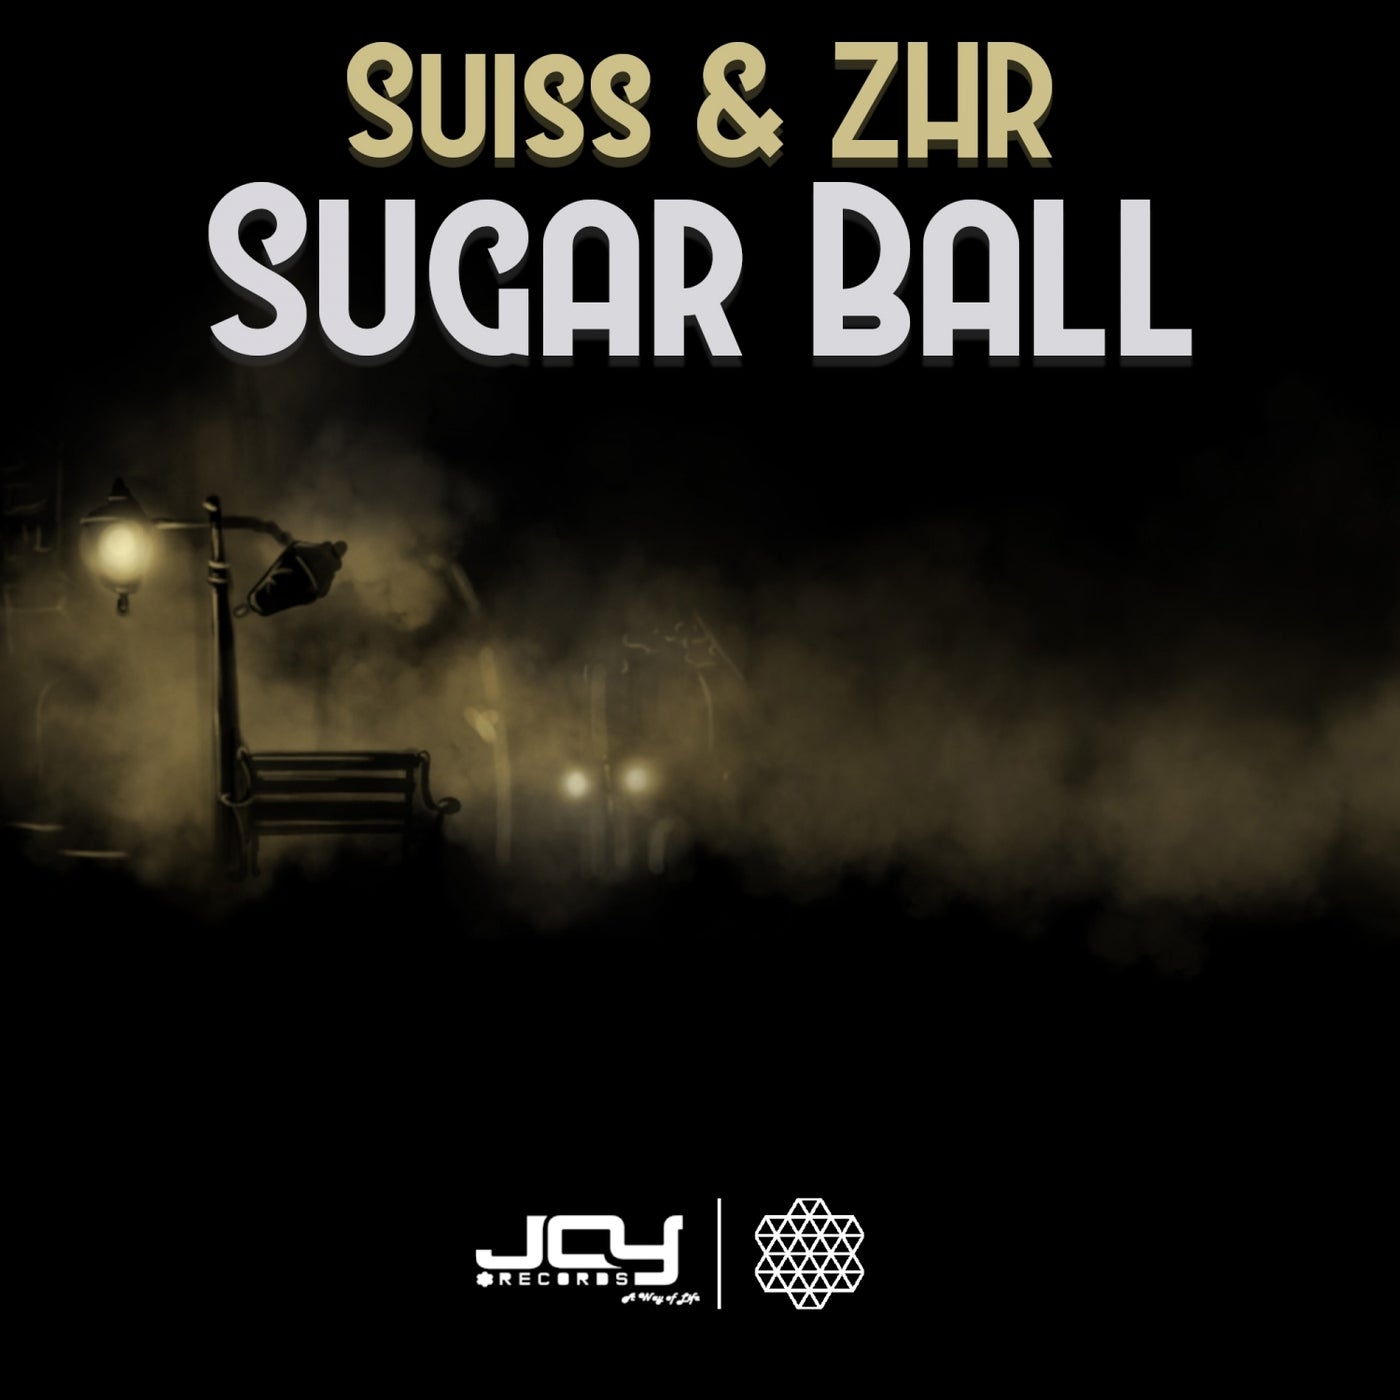 Sugar Ball